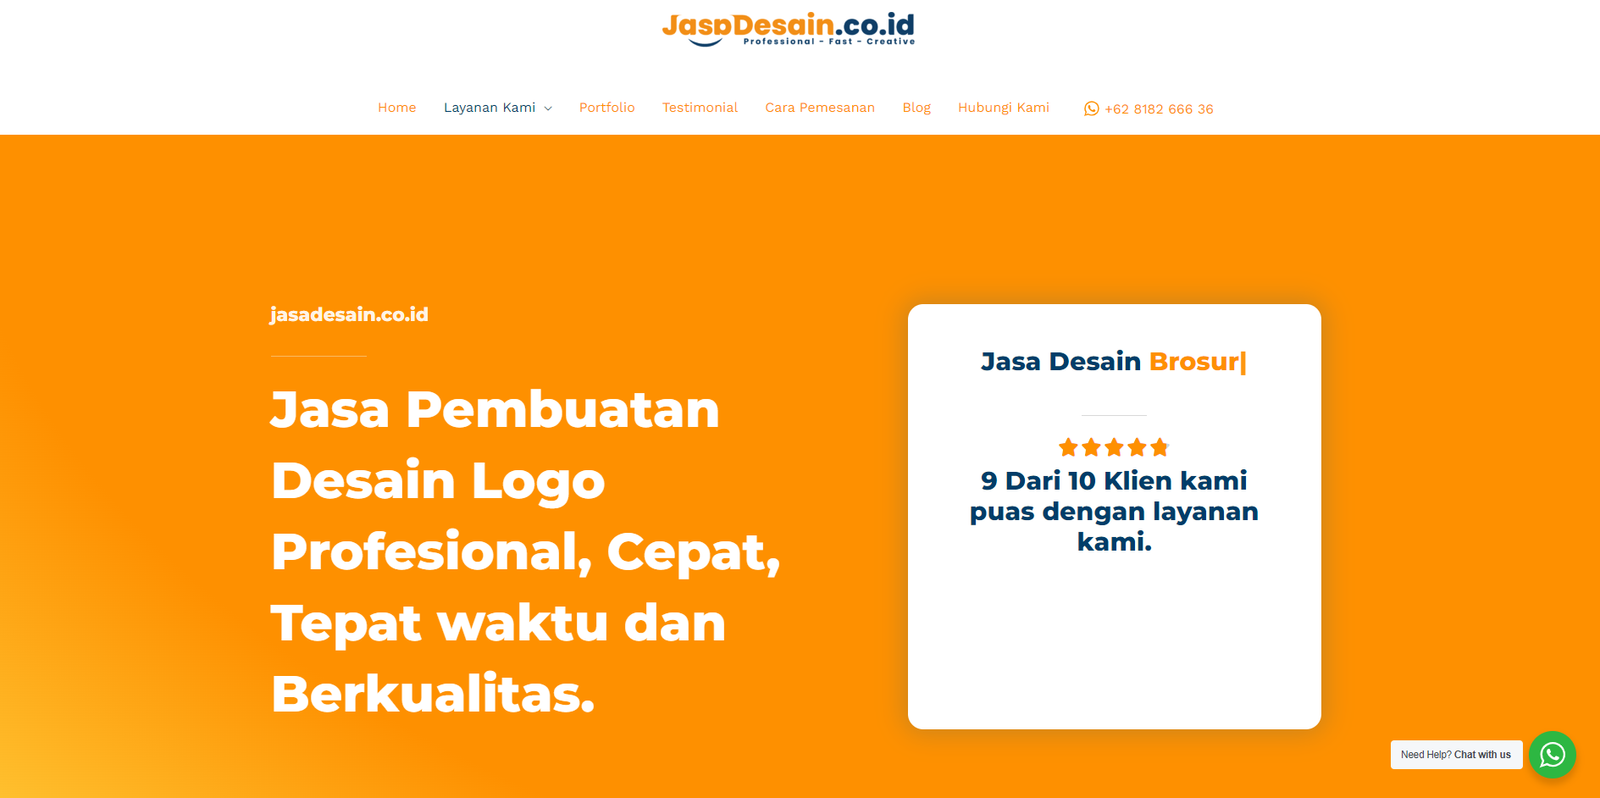 JasaDesan.co.id